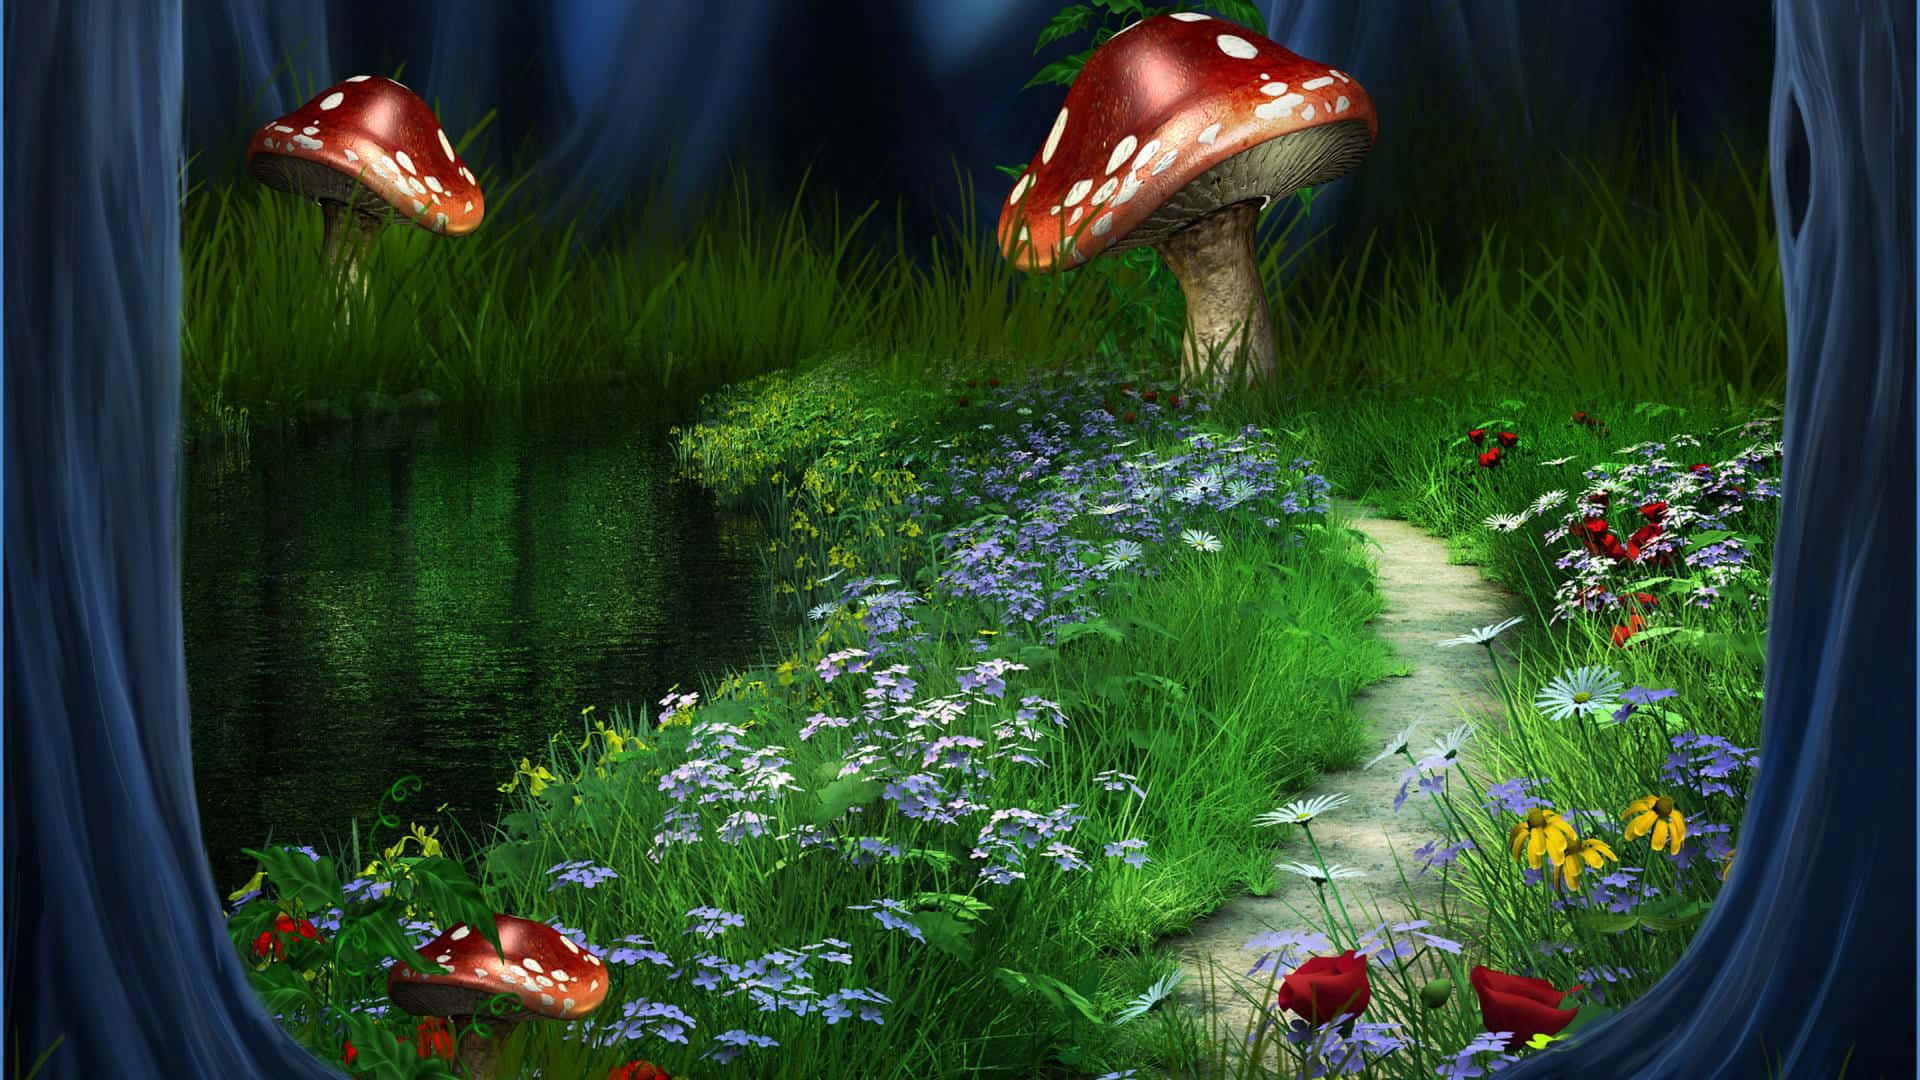 Adorable Kawaii Mushroom in a Fantasy Forest Wallpaper